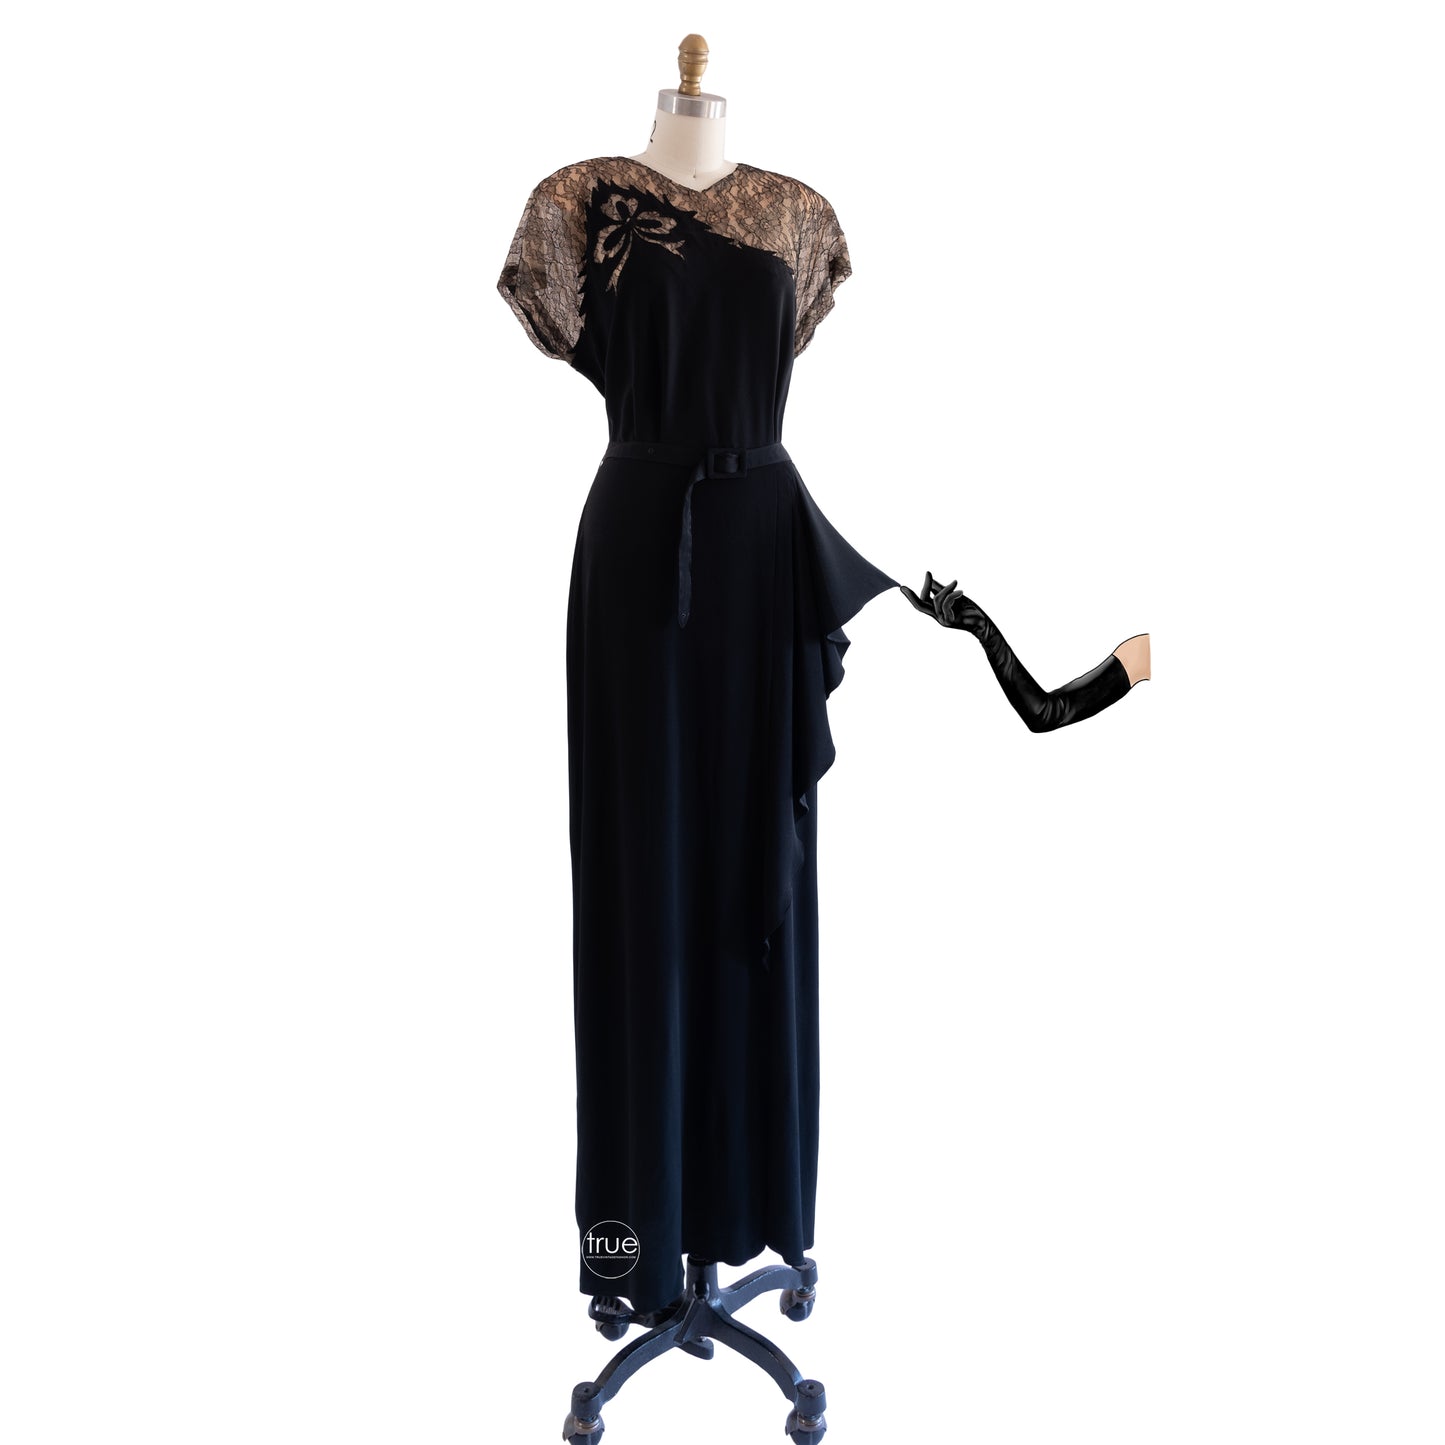 vintage 1940's dress ...exquisite EMMA DOMB black nude illusion dress